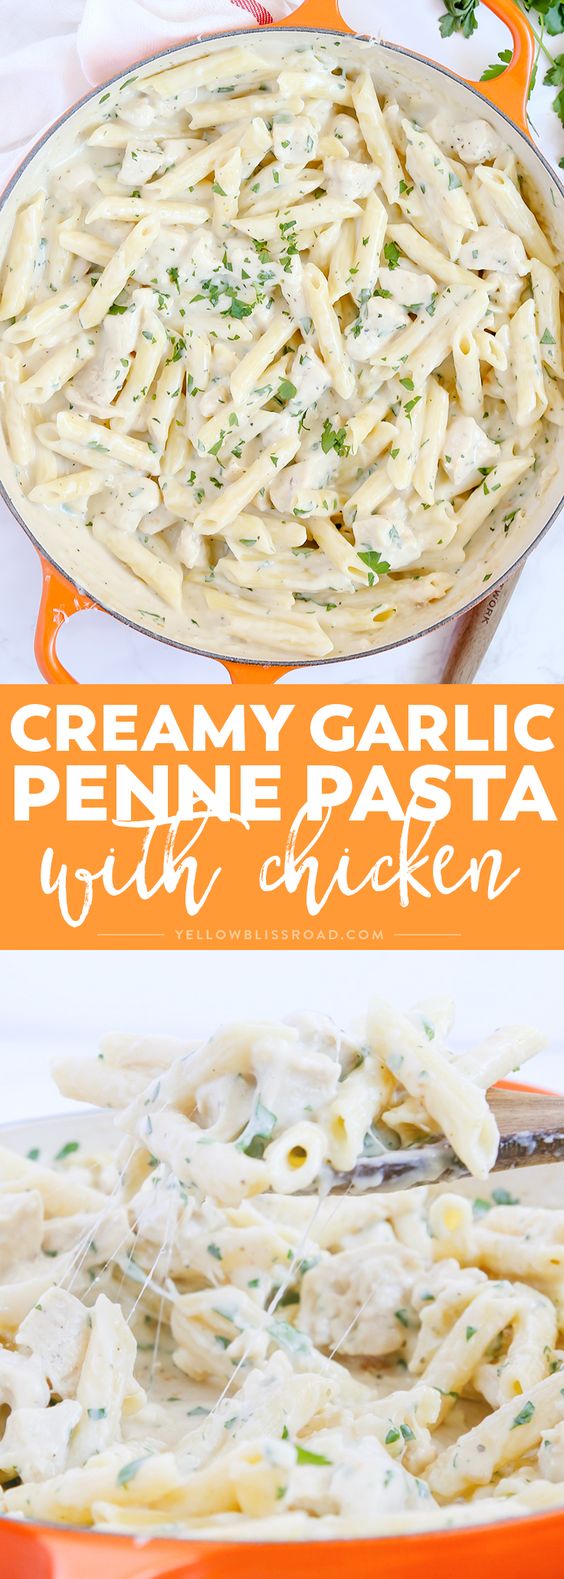 CREAMY GARLIC PENNE PASTA WITH CHICKEN #creamy #garlic #penne #pasta #pastarecipes #chicken #chickenrecipes #easyrecipes